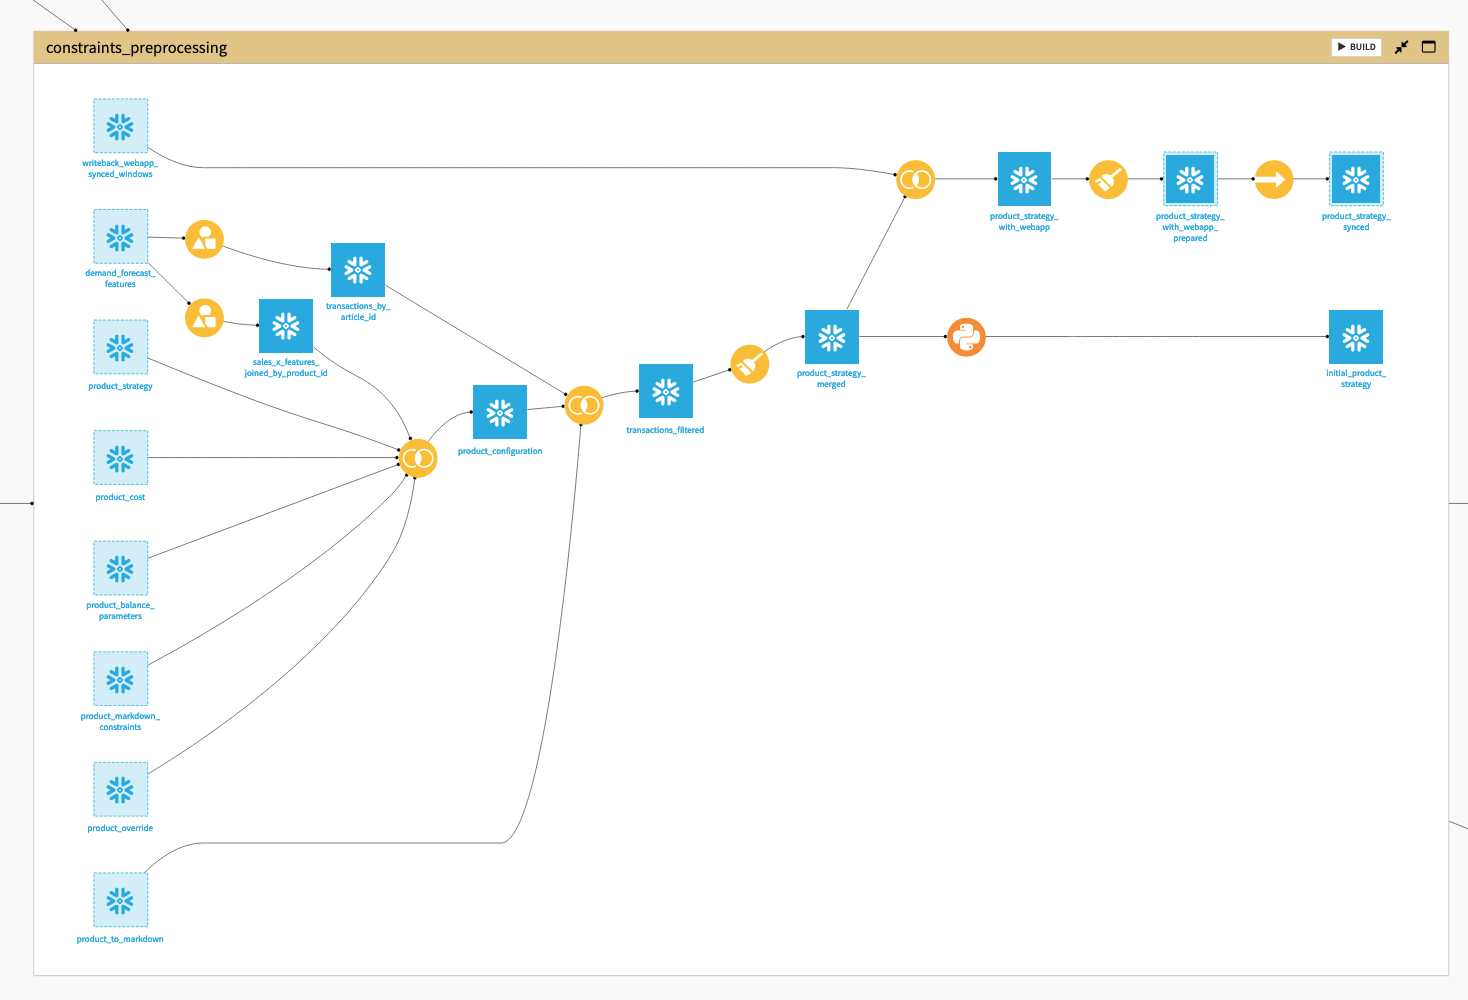 Dataiku screenshot of part of constraint preprocessing Flow zone